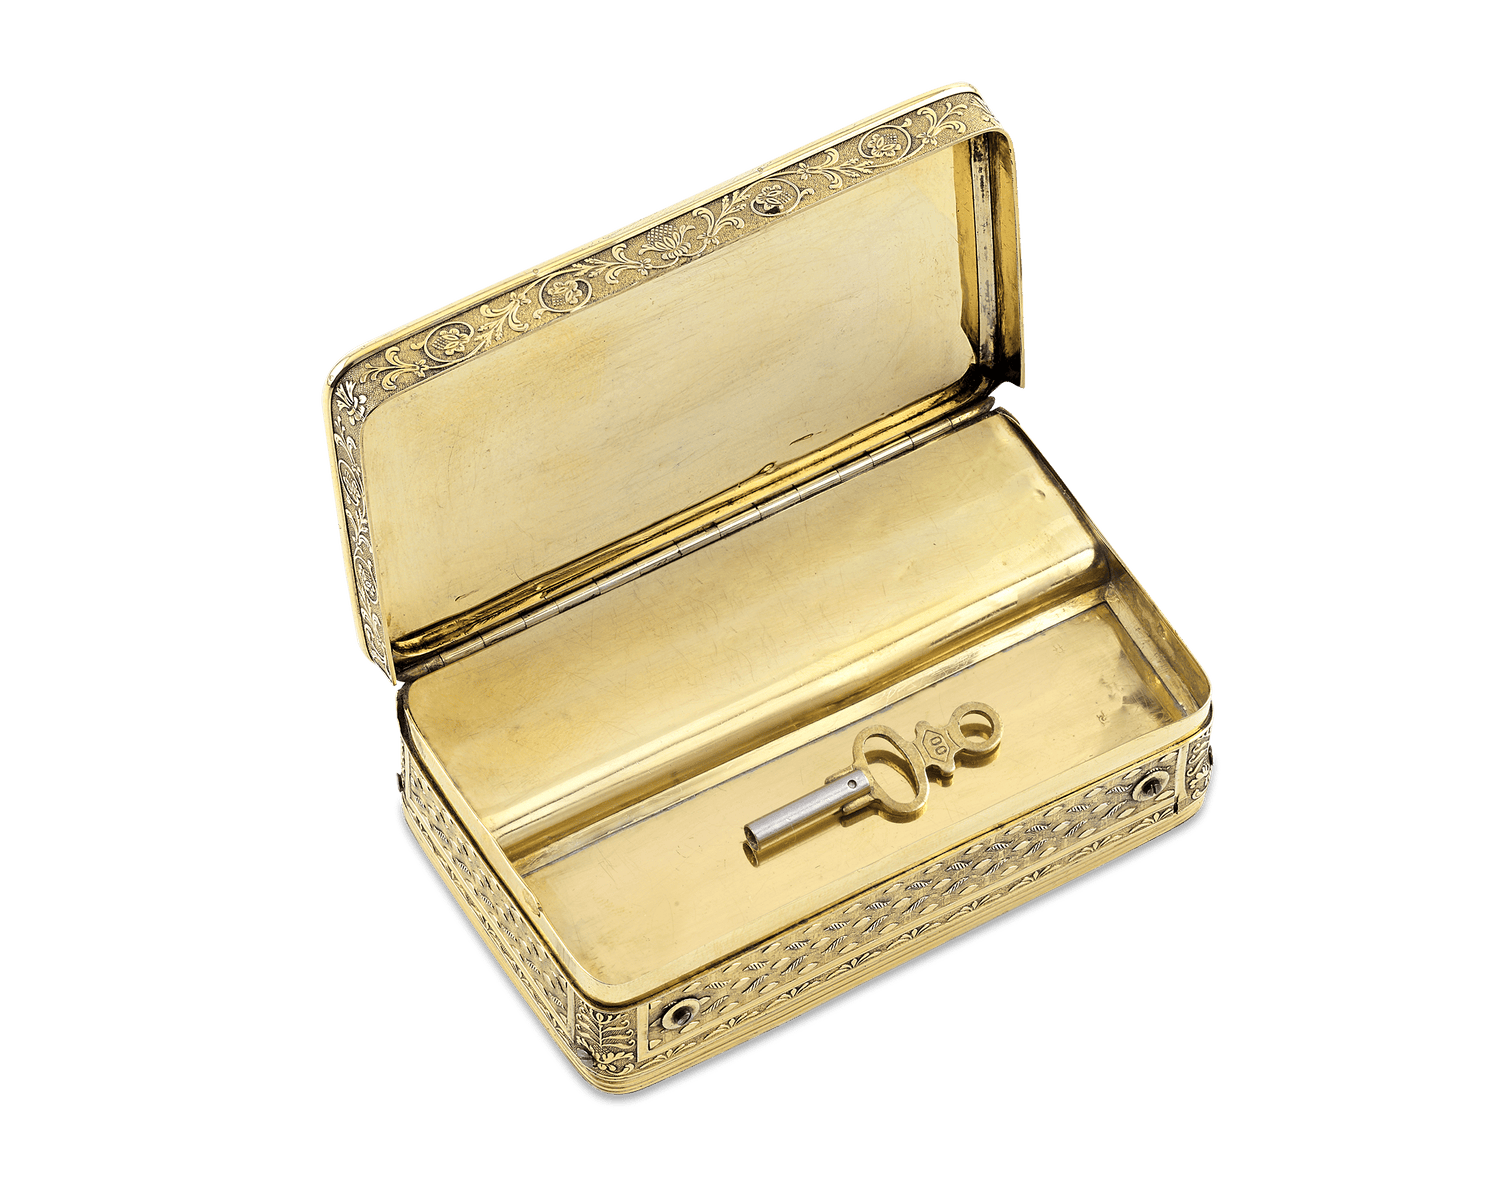 Silver-Gilt Musical Snuff Box by François Nicole